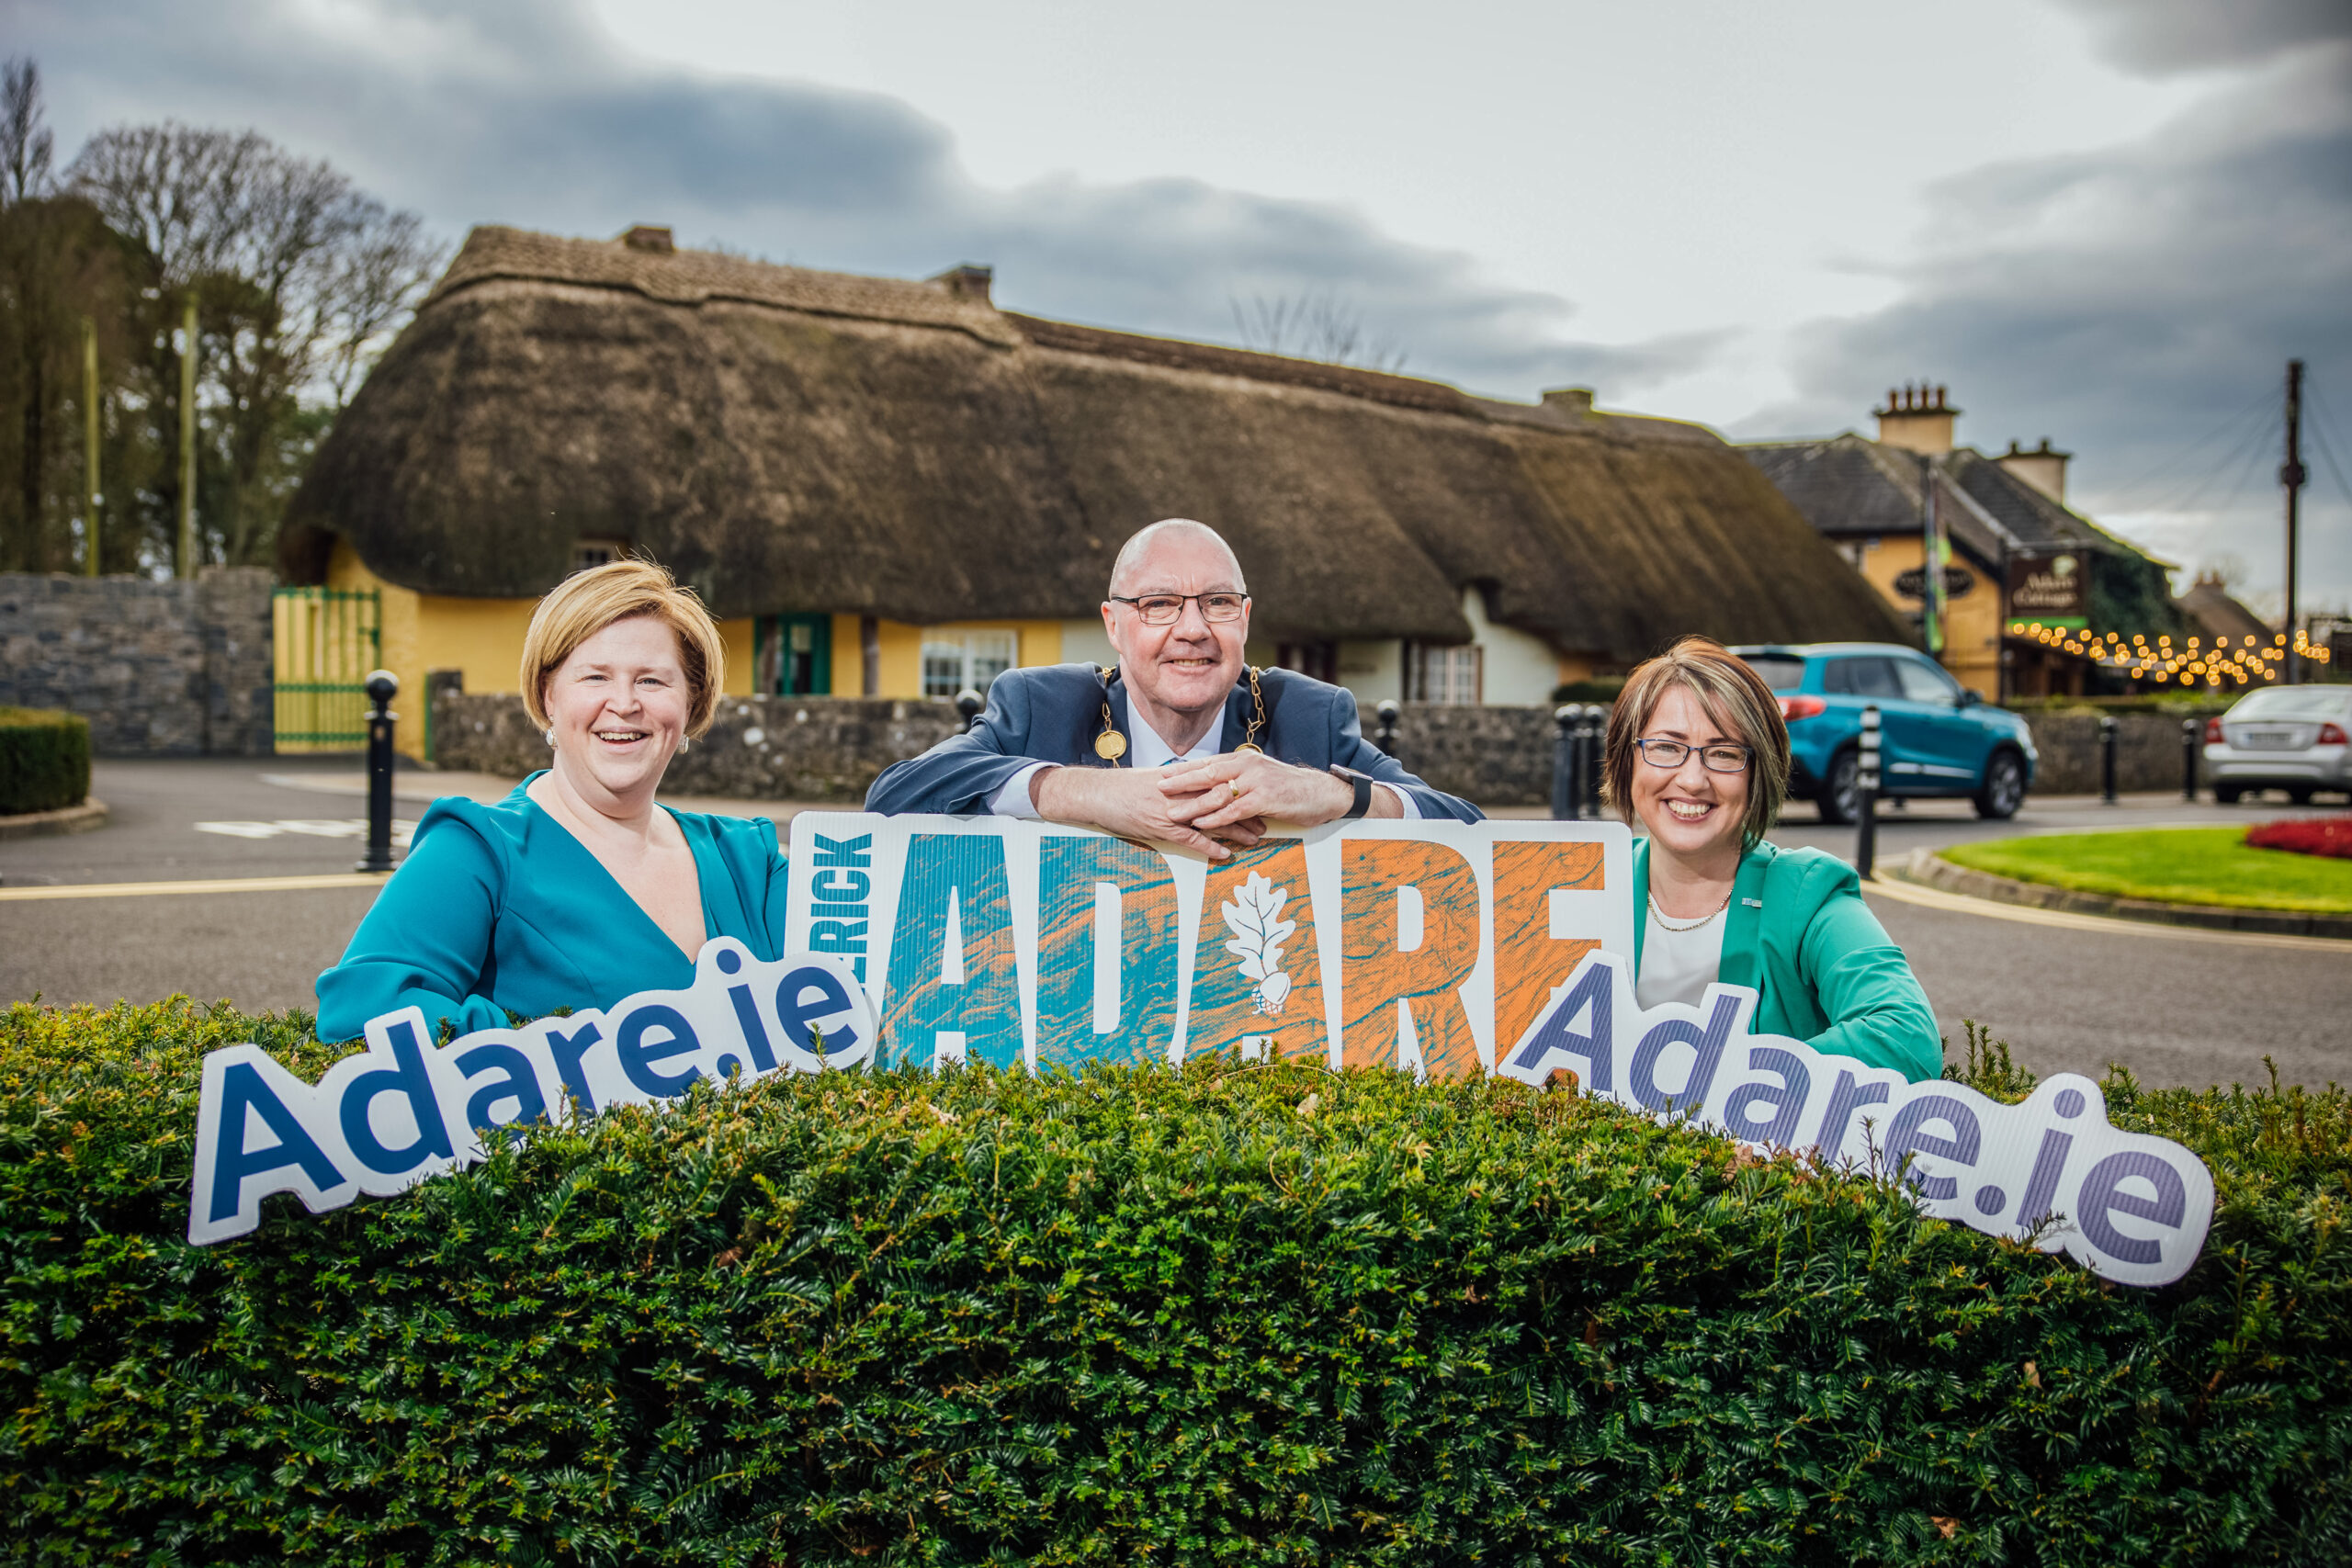 Adare brand to take Ireland’s ‘prettiest village’ on international stage